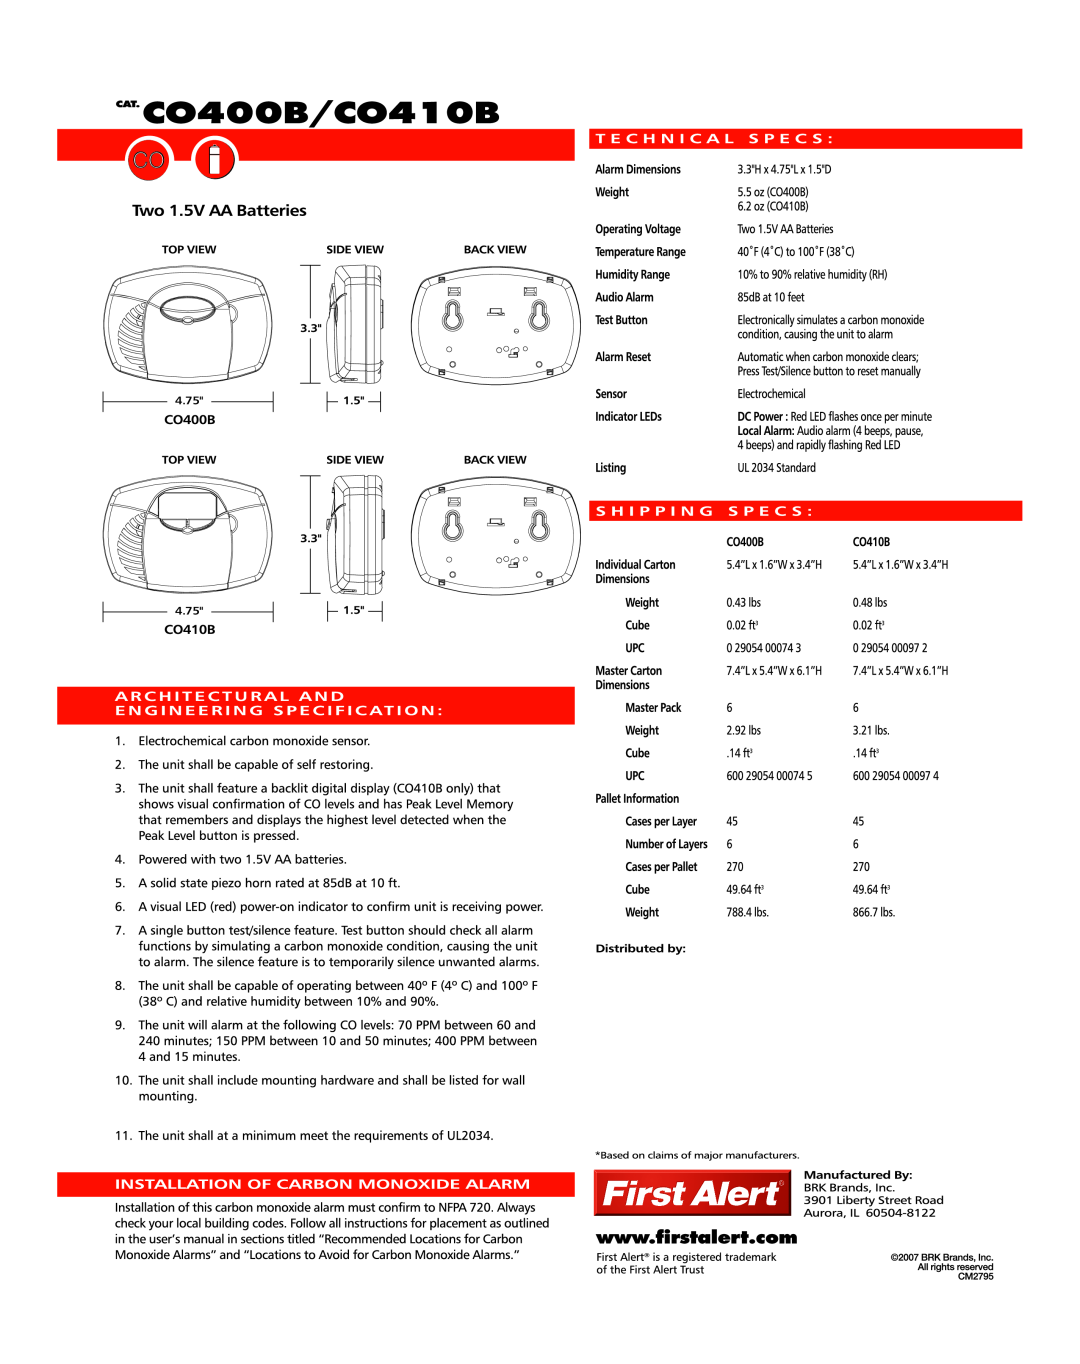 BRK electronic CO410B, CO400B manual 4.75 